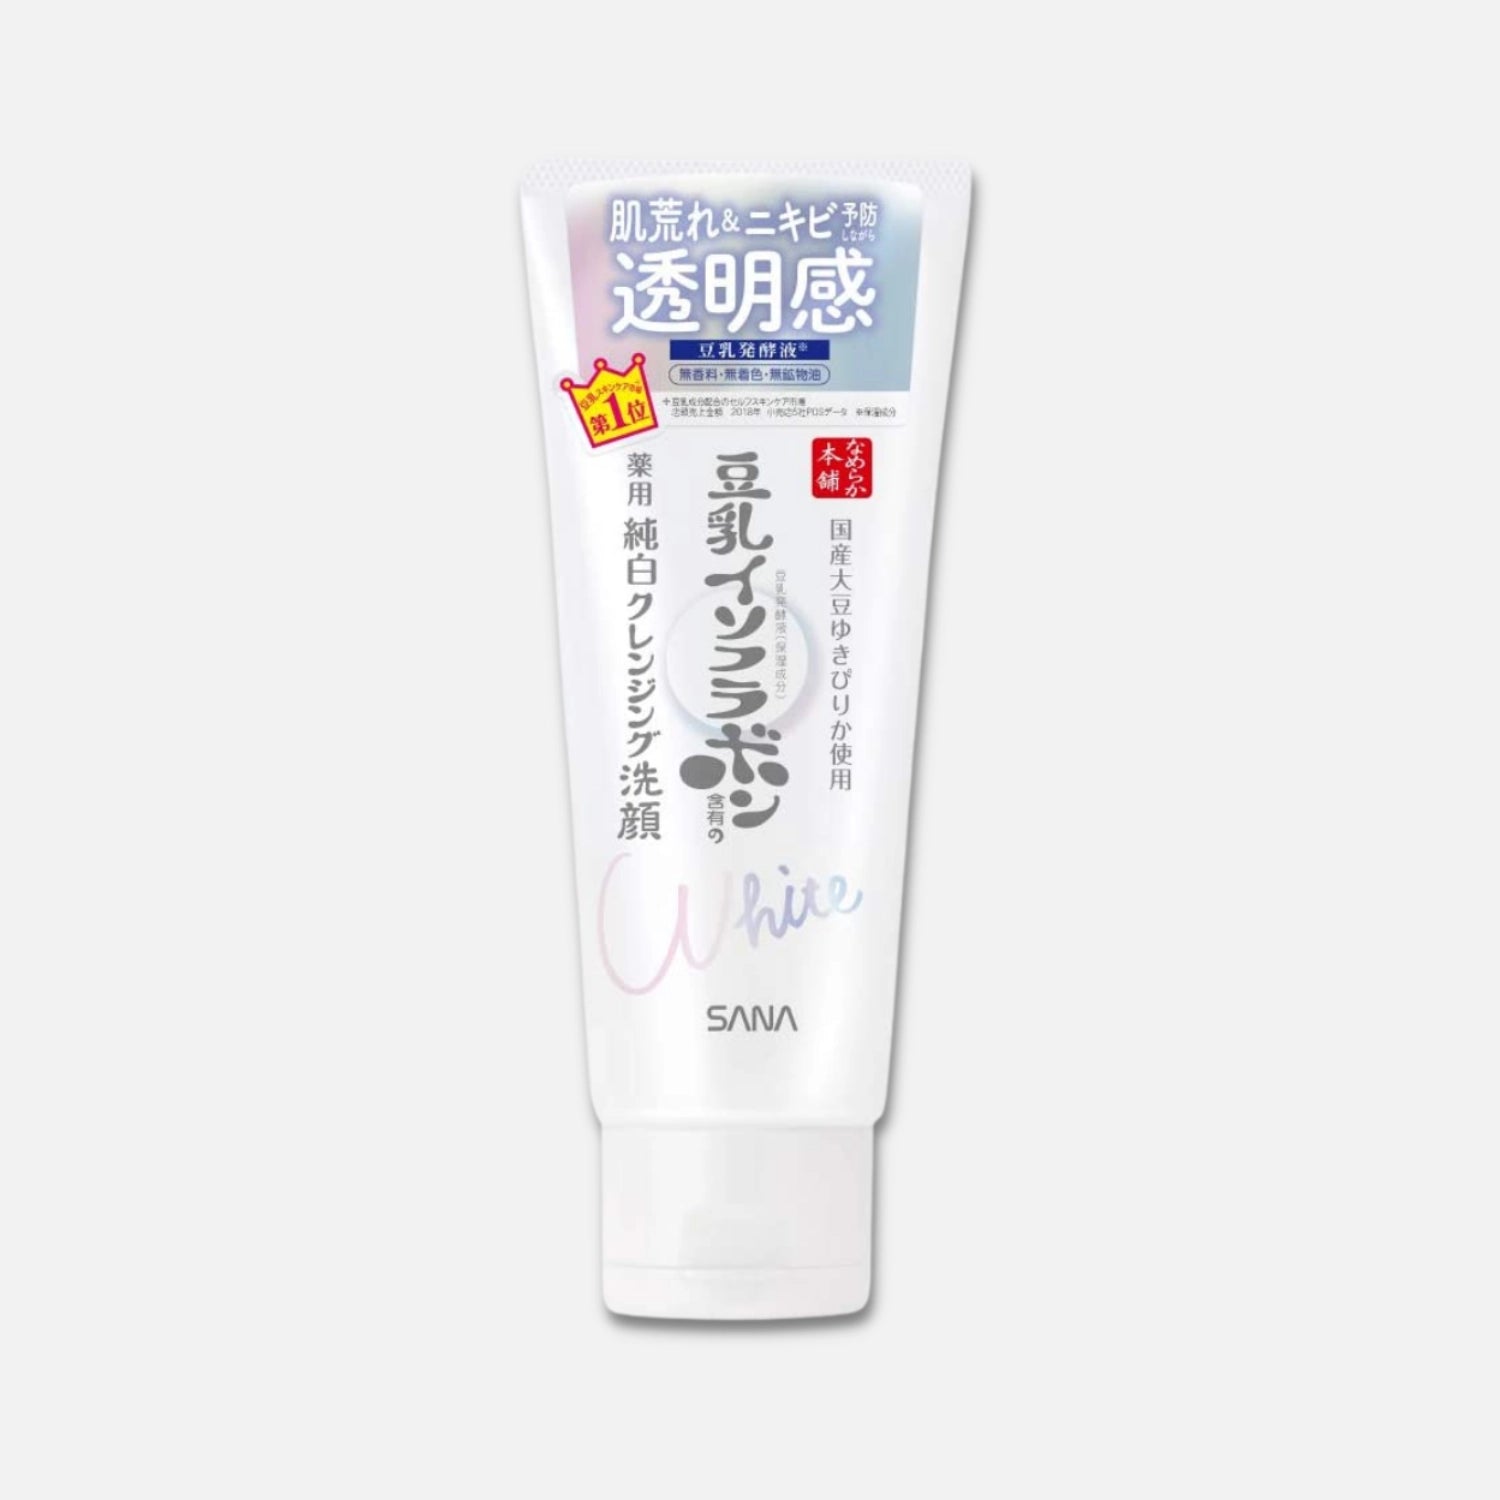 Sana Soy Isoflavones Whitening & Acne Care Face Cleanser 150g - Buy Me Japan